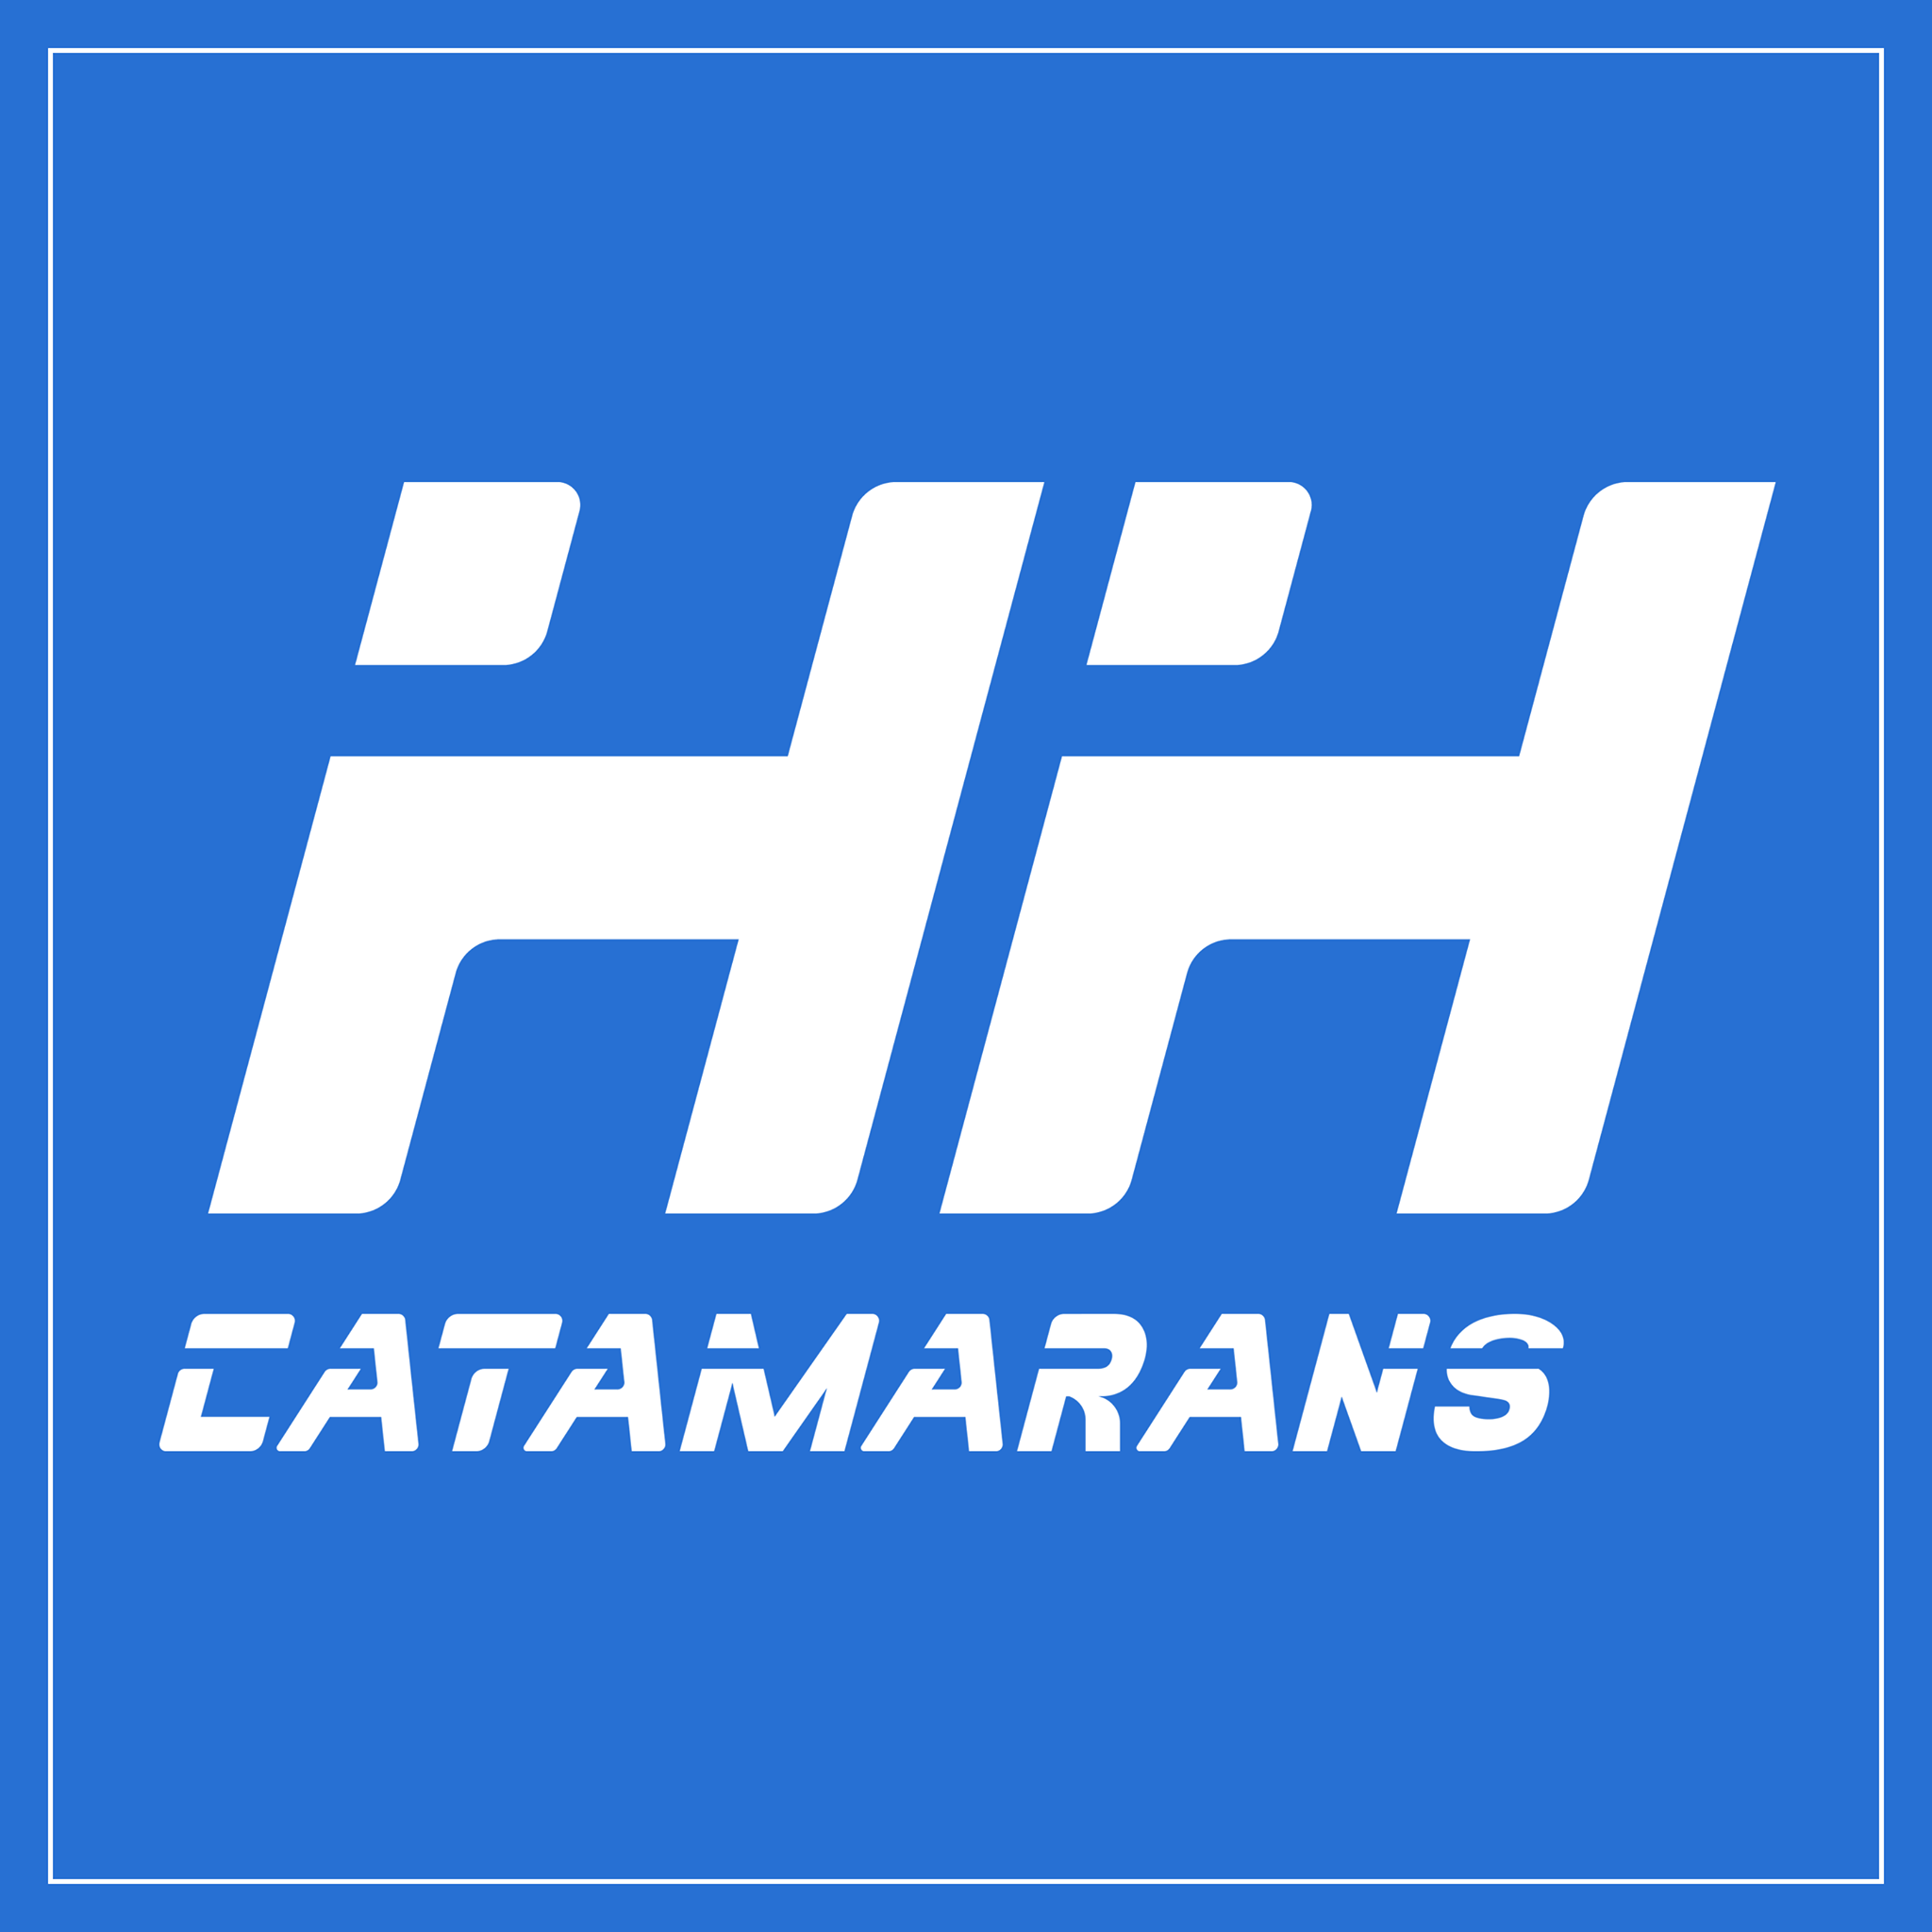 HH Catamarans logo